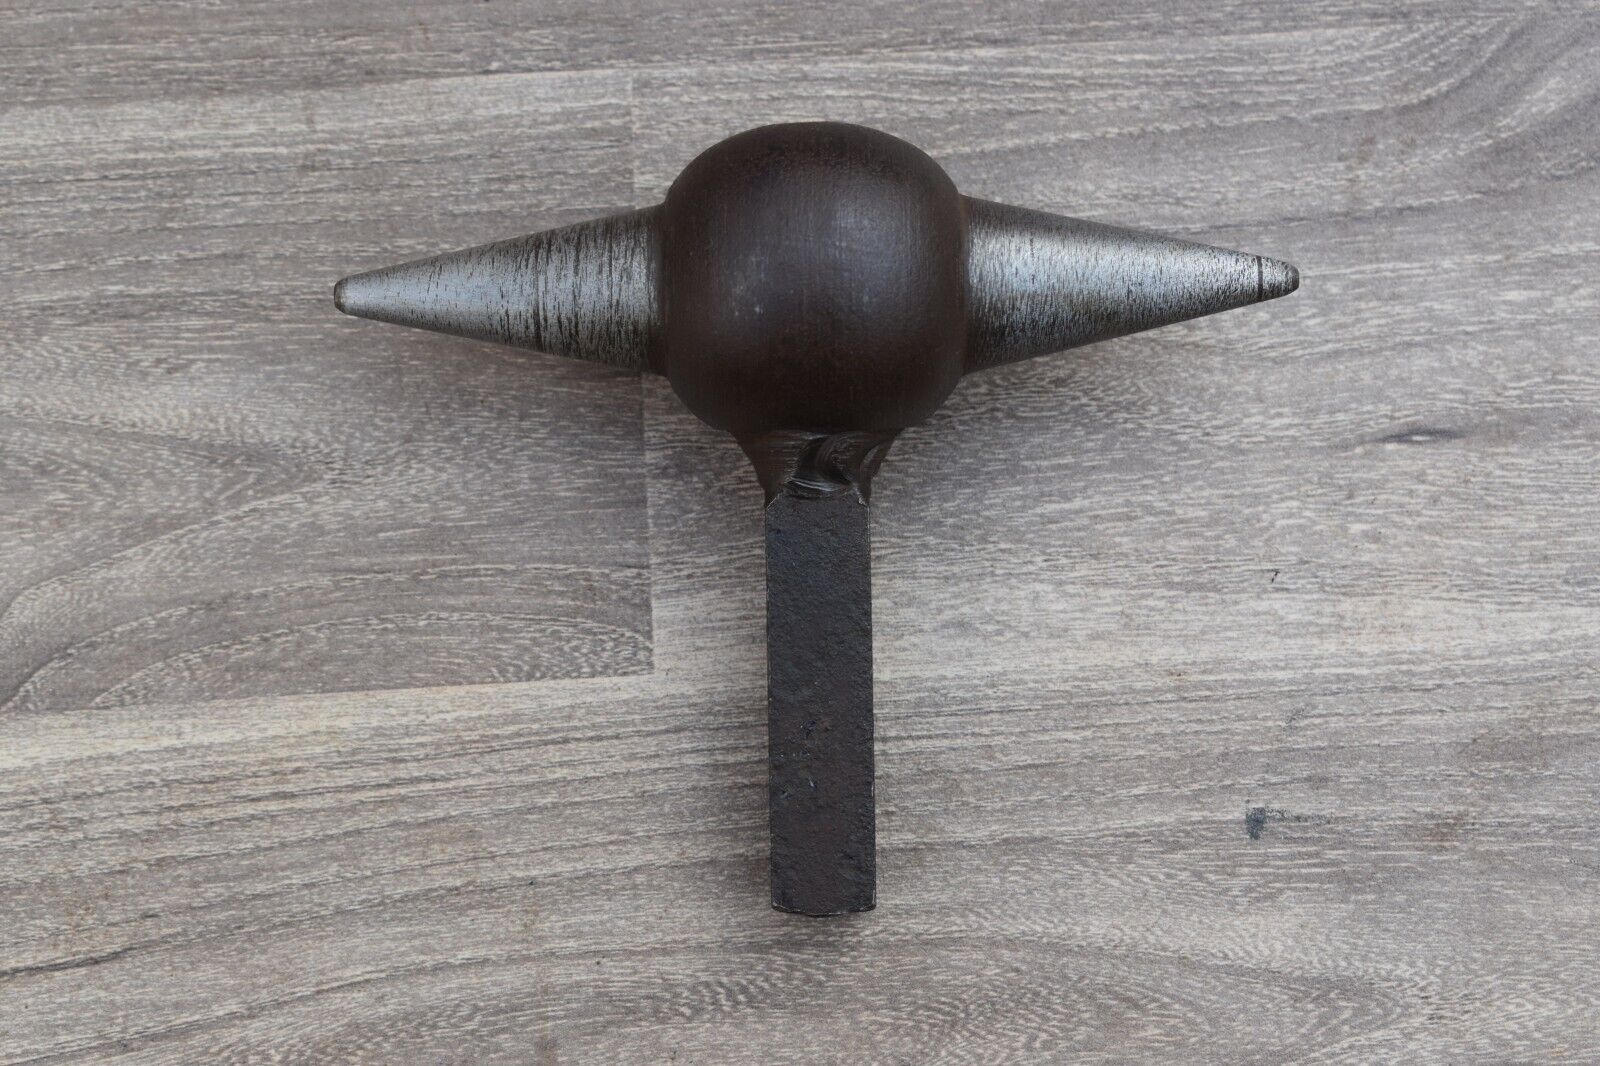 Vintage Silversmith blacksmith hardy double horn cone on ball iron anvil tool